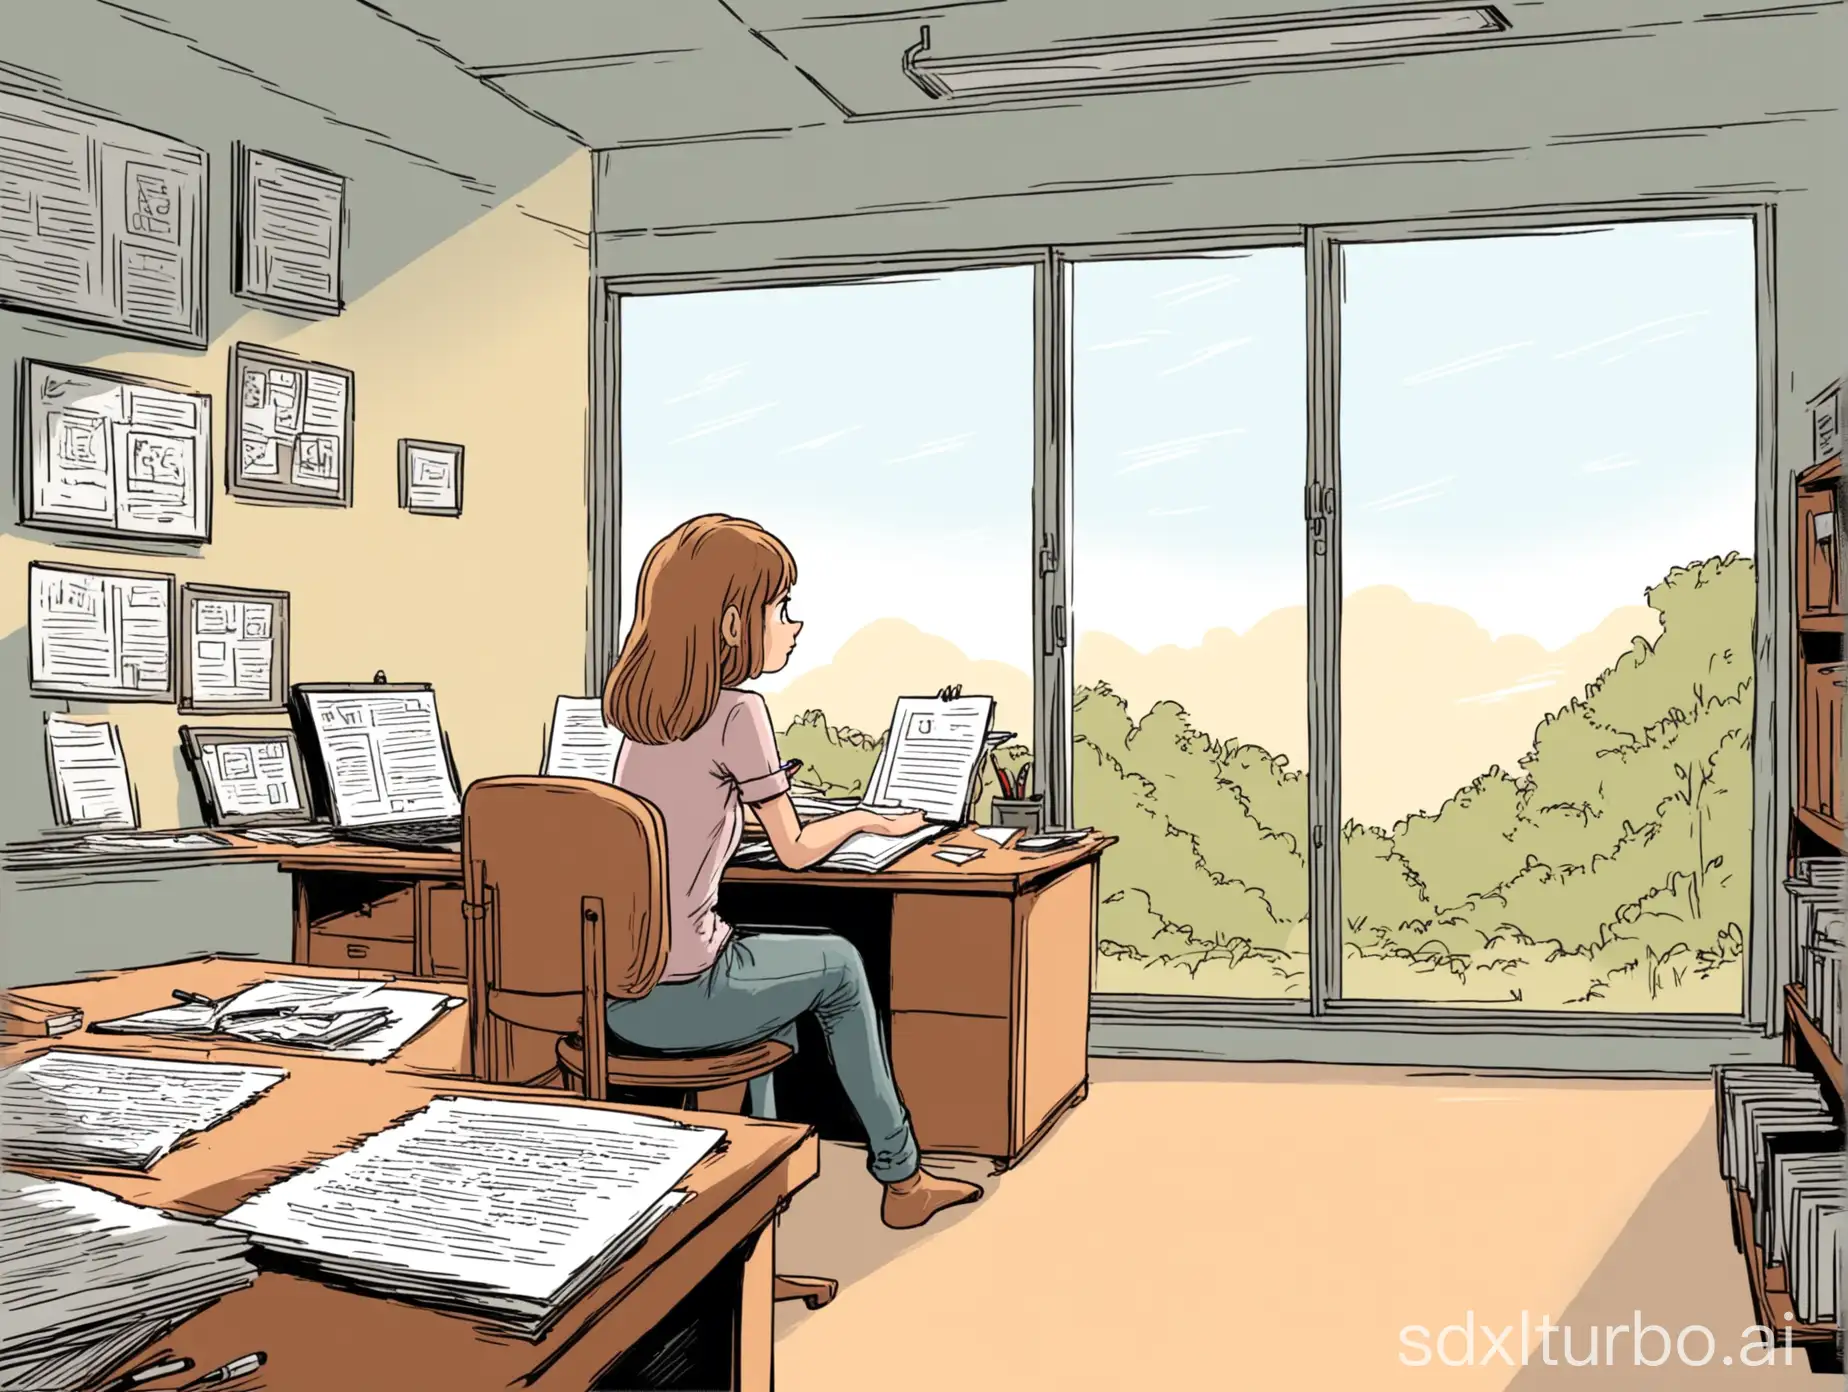 Girl-Sitting-in-Writing-Office-Cartoon-Style-Illustration